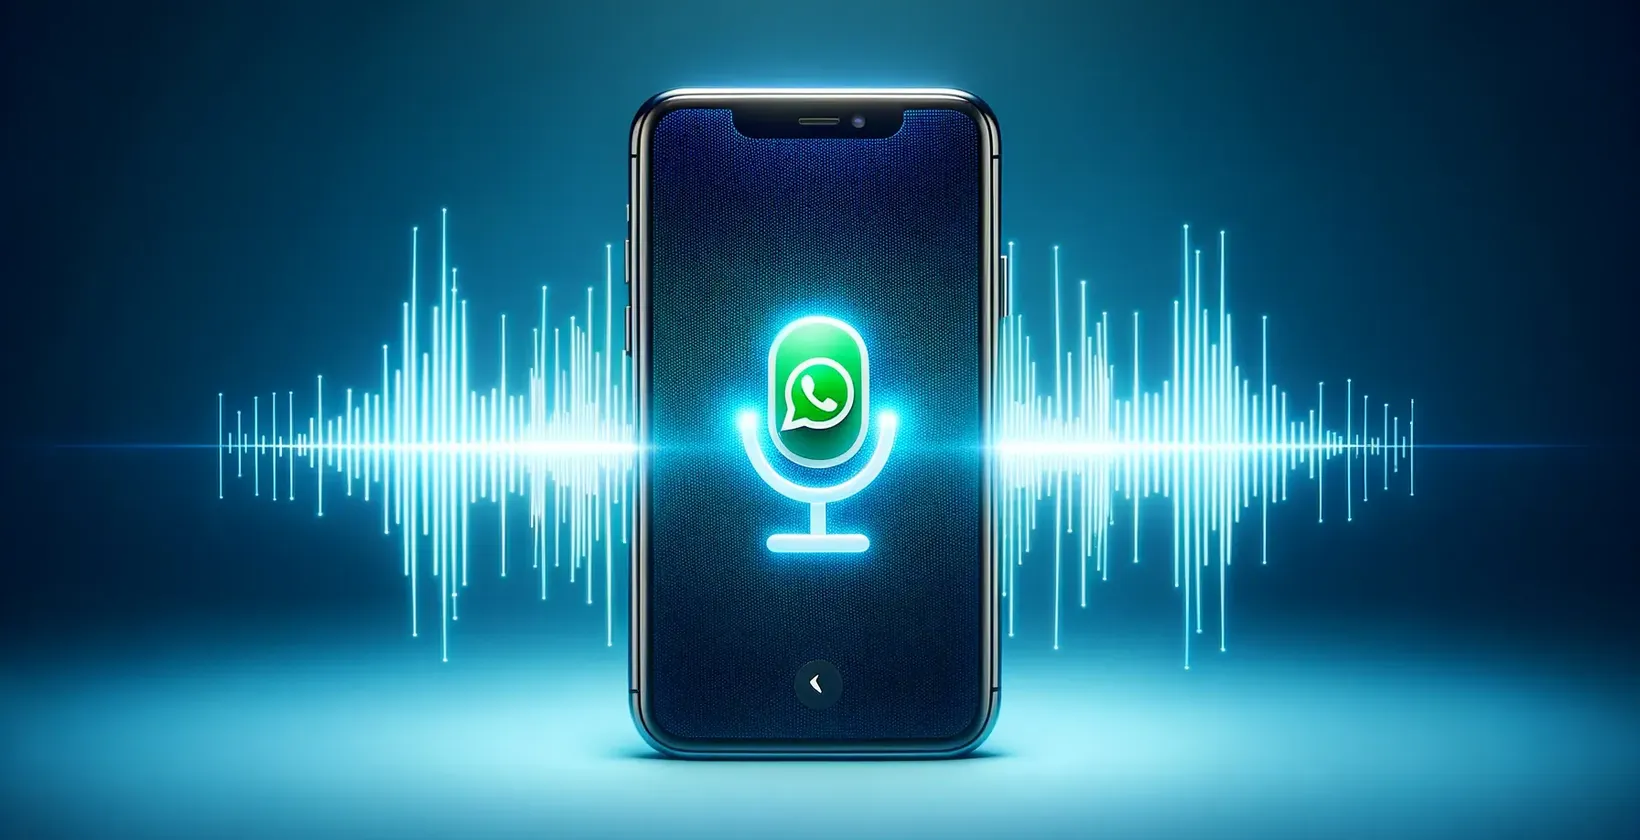 WhatsAppディクテーション機能付き音声通話のコンセプトを表した画像。